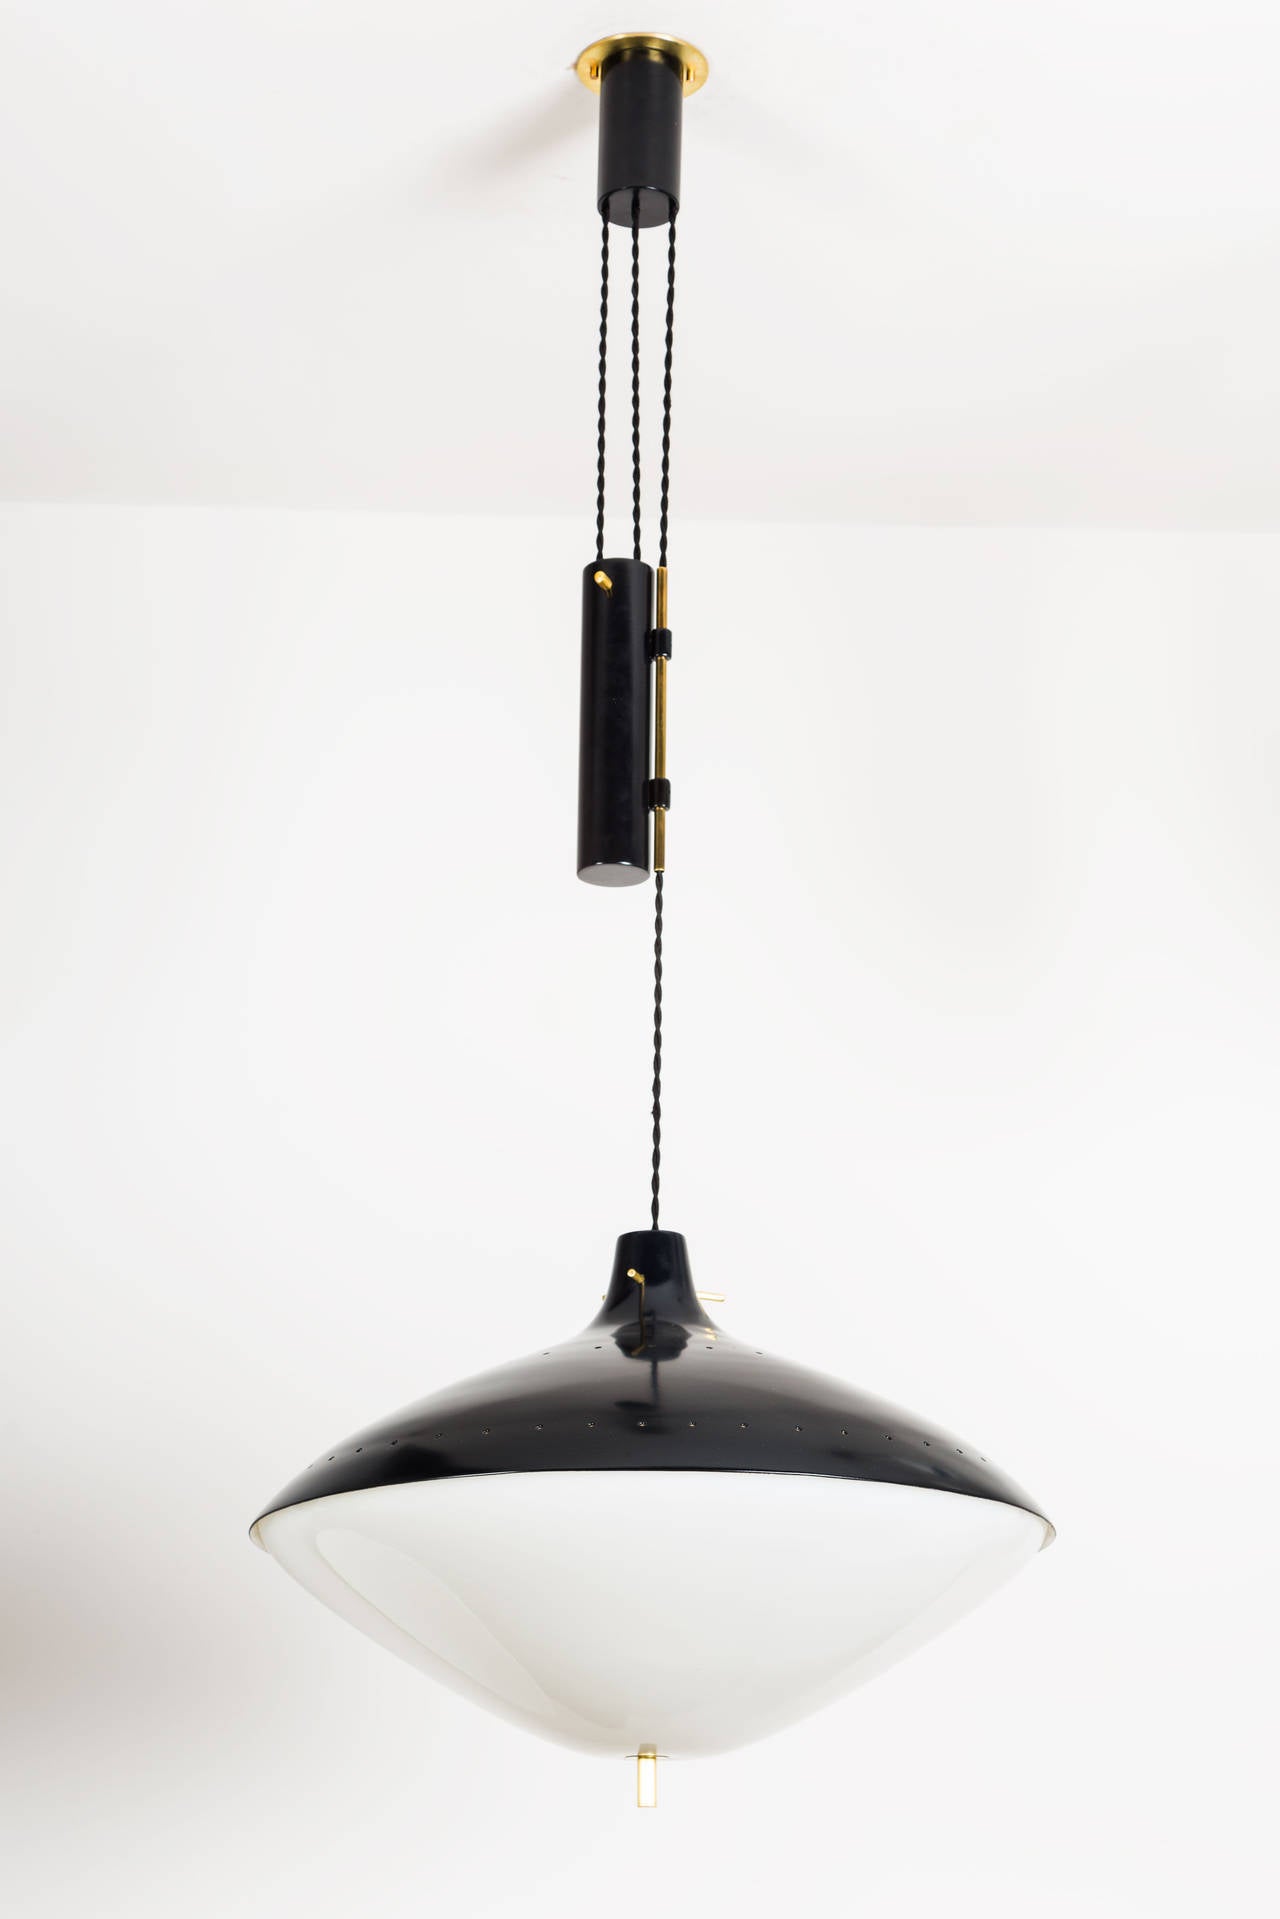 Mid-20th Century Italian Pulley Lamp